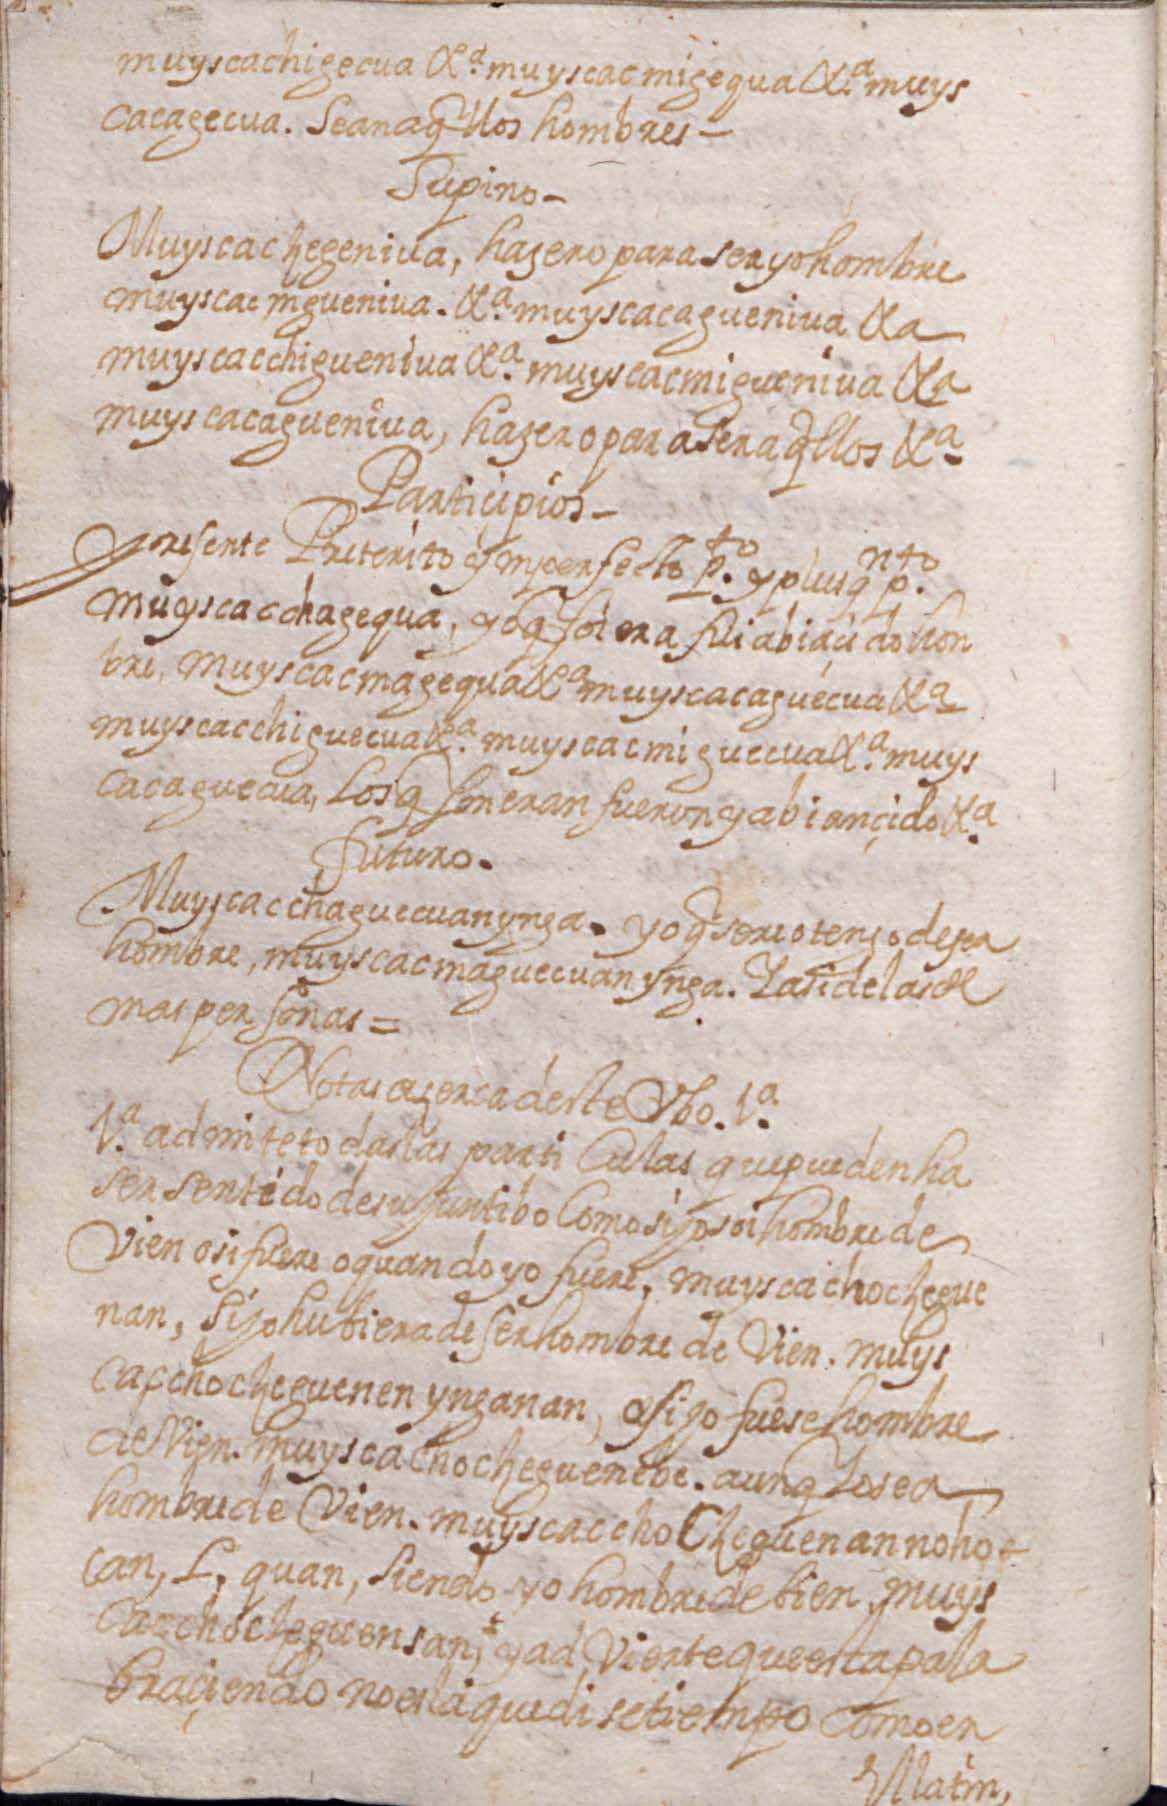 Manuscrito 158 BNC Gramatica - fol 27v.jpg